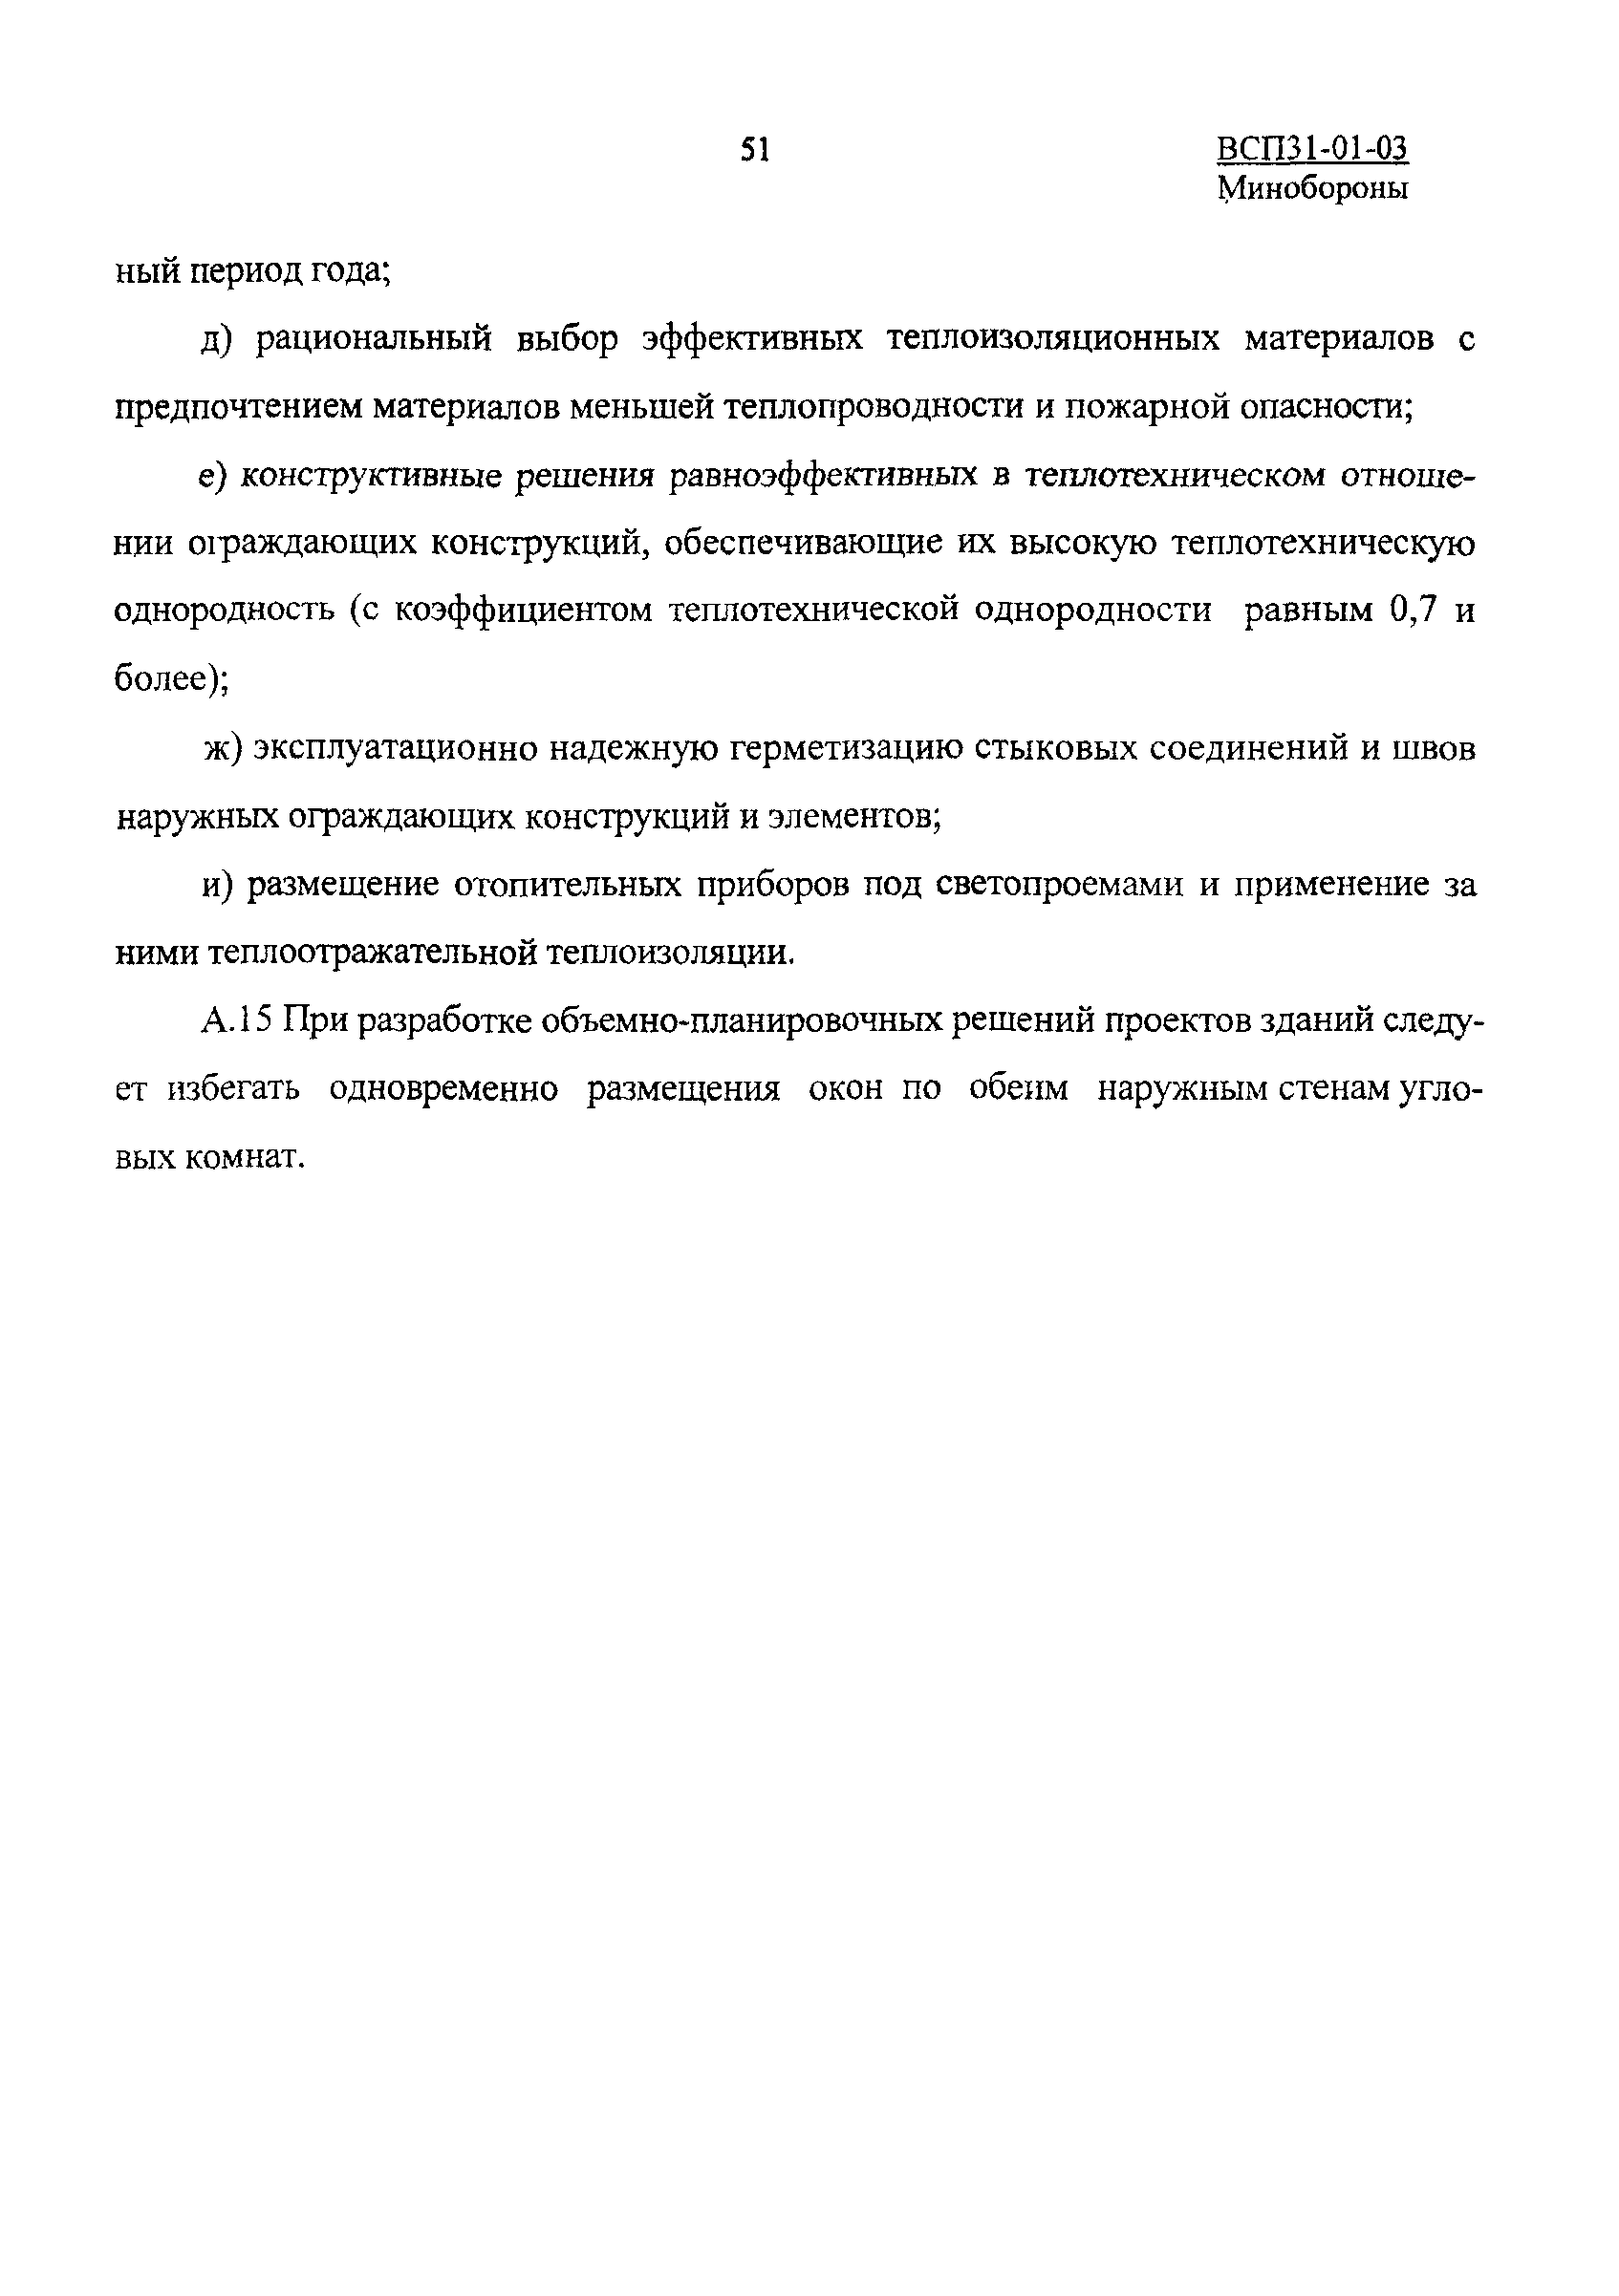 ВСП 31-01-03 МО РФ